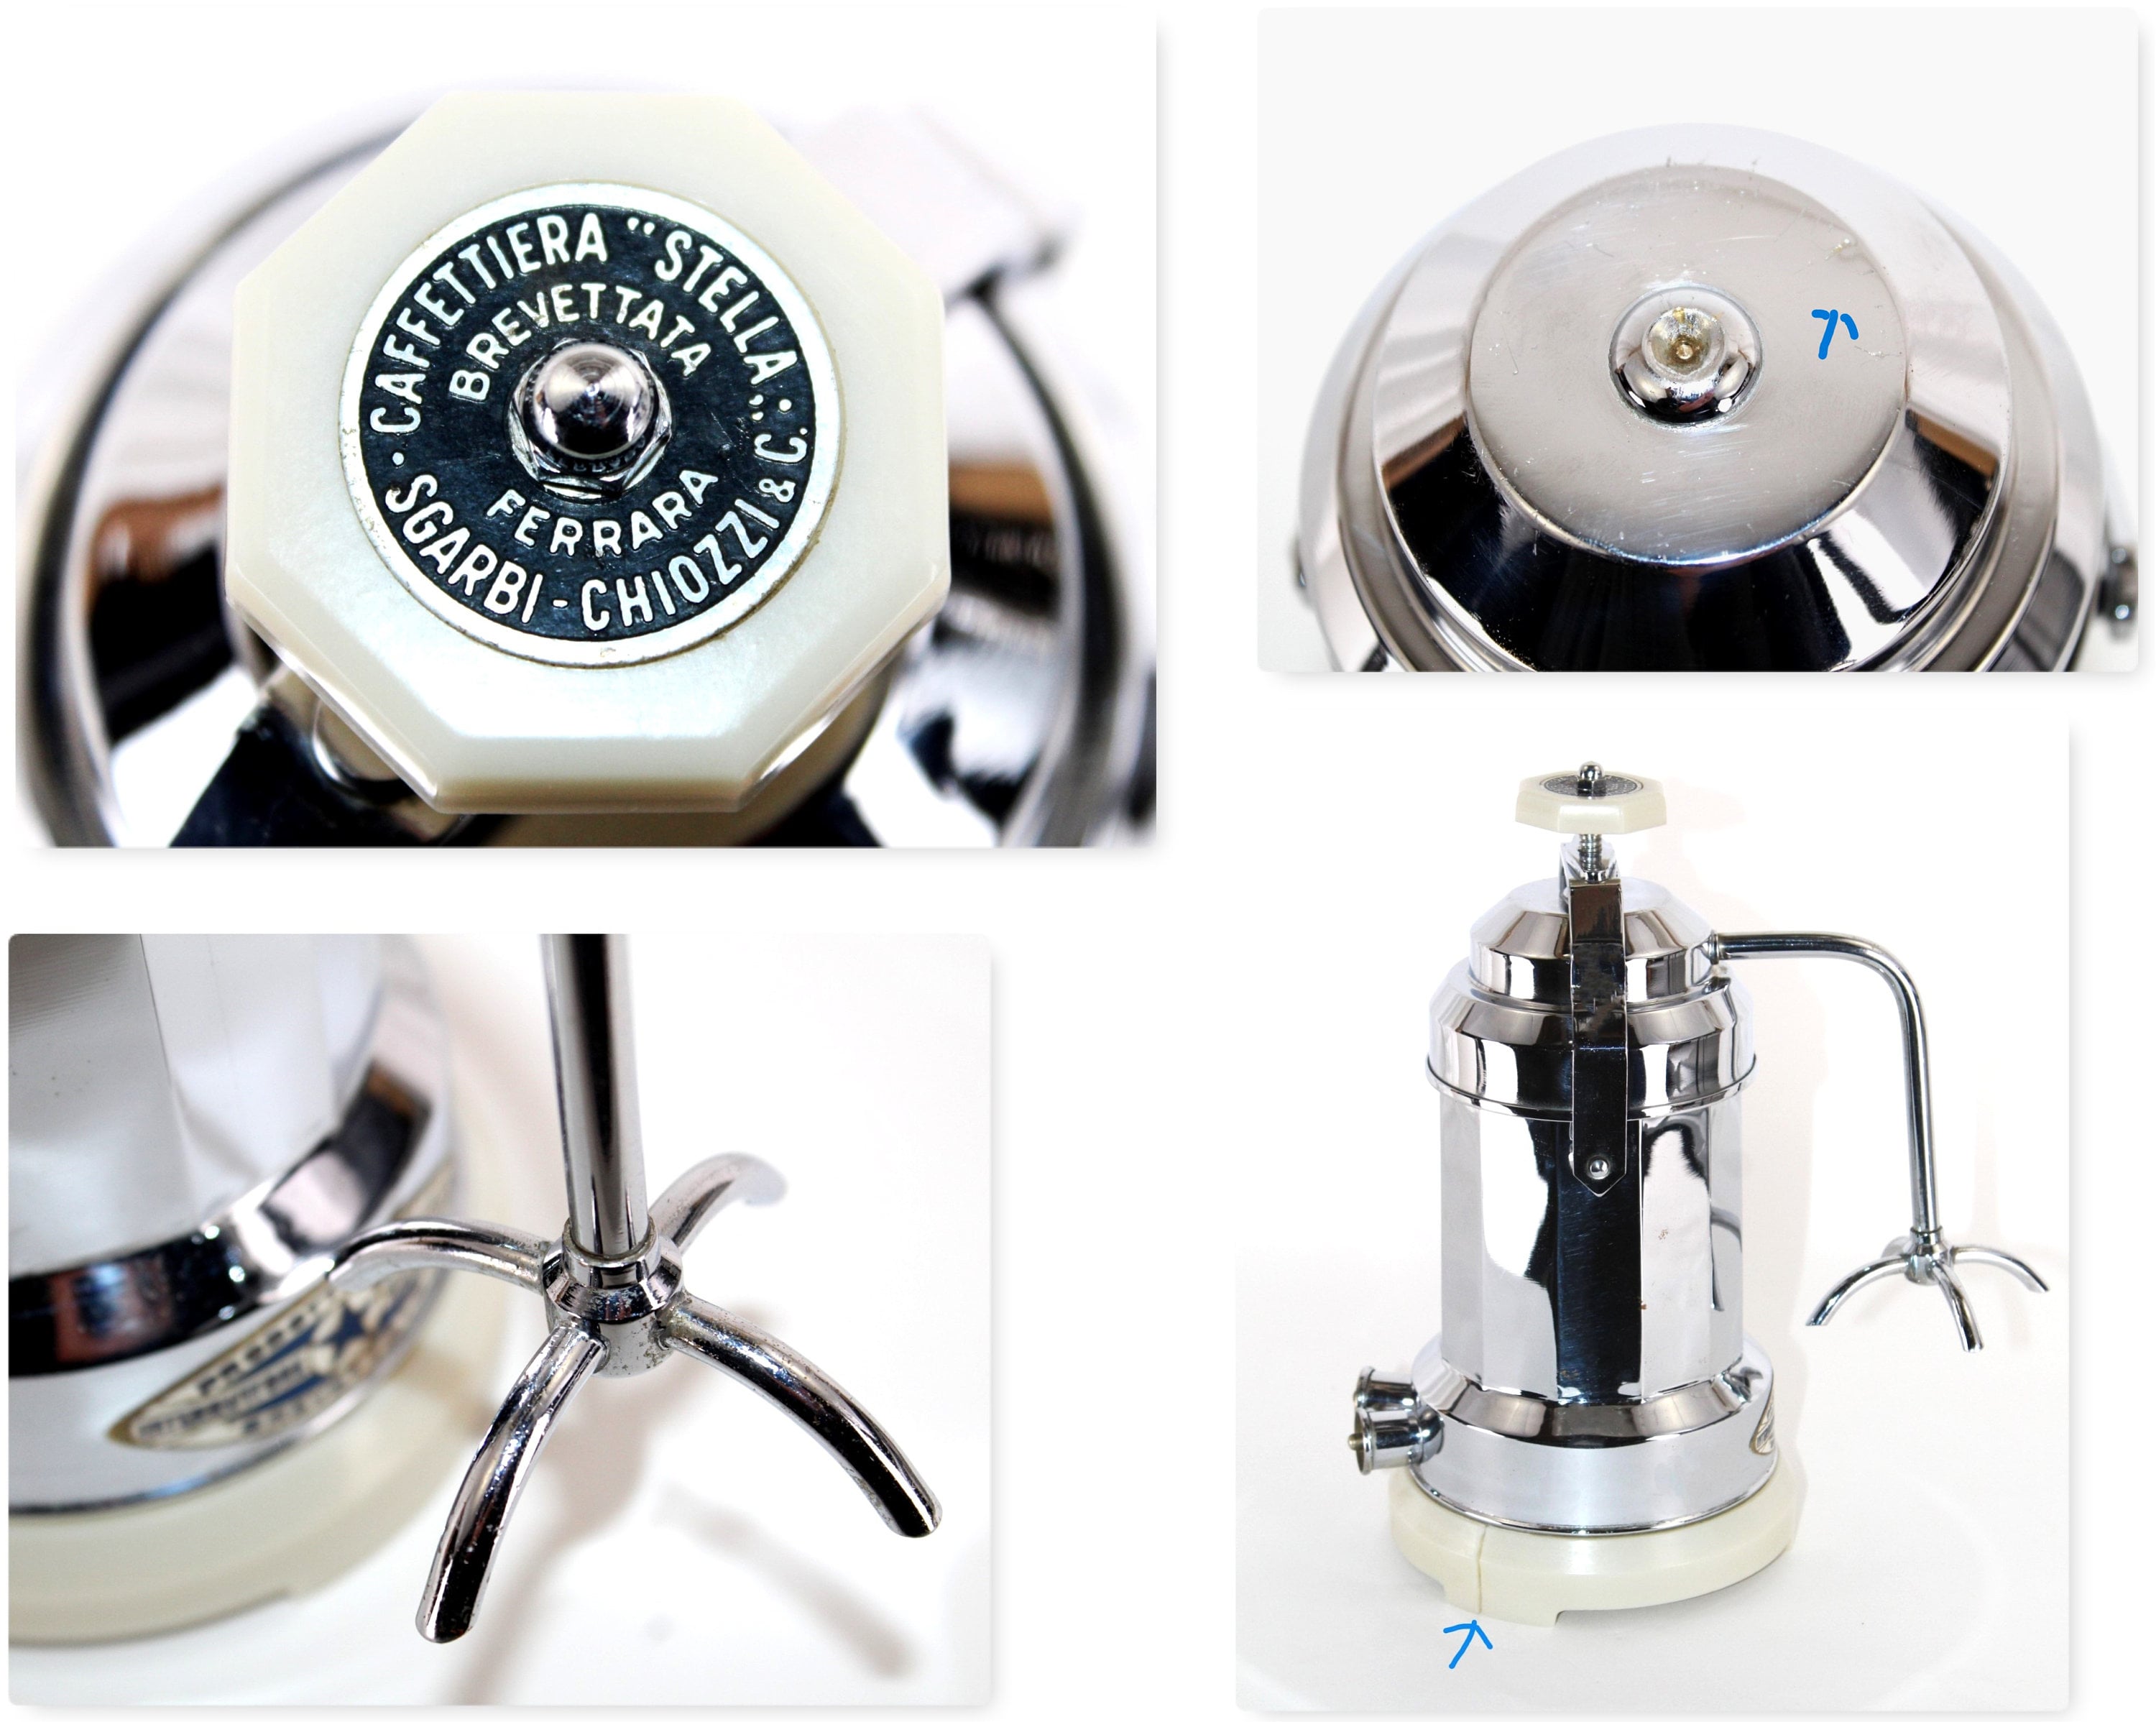 Estella Caffe ECB-3D3L Automatic Coffee Maker with 3 Decanter